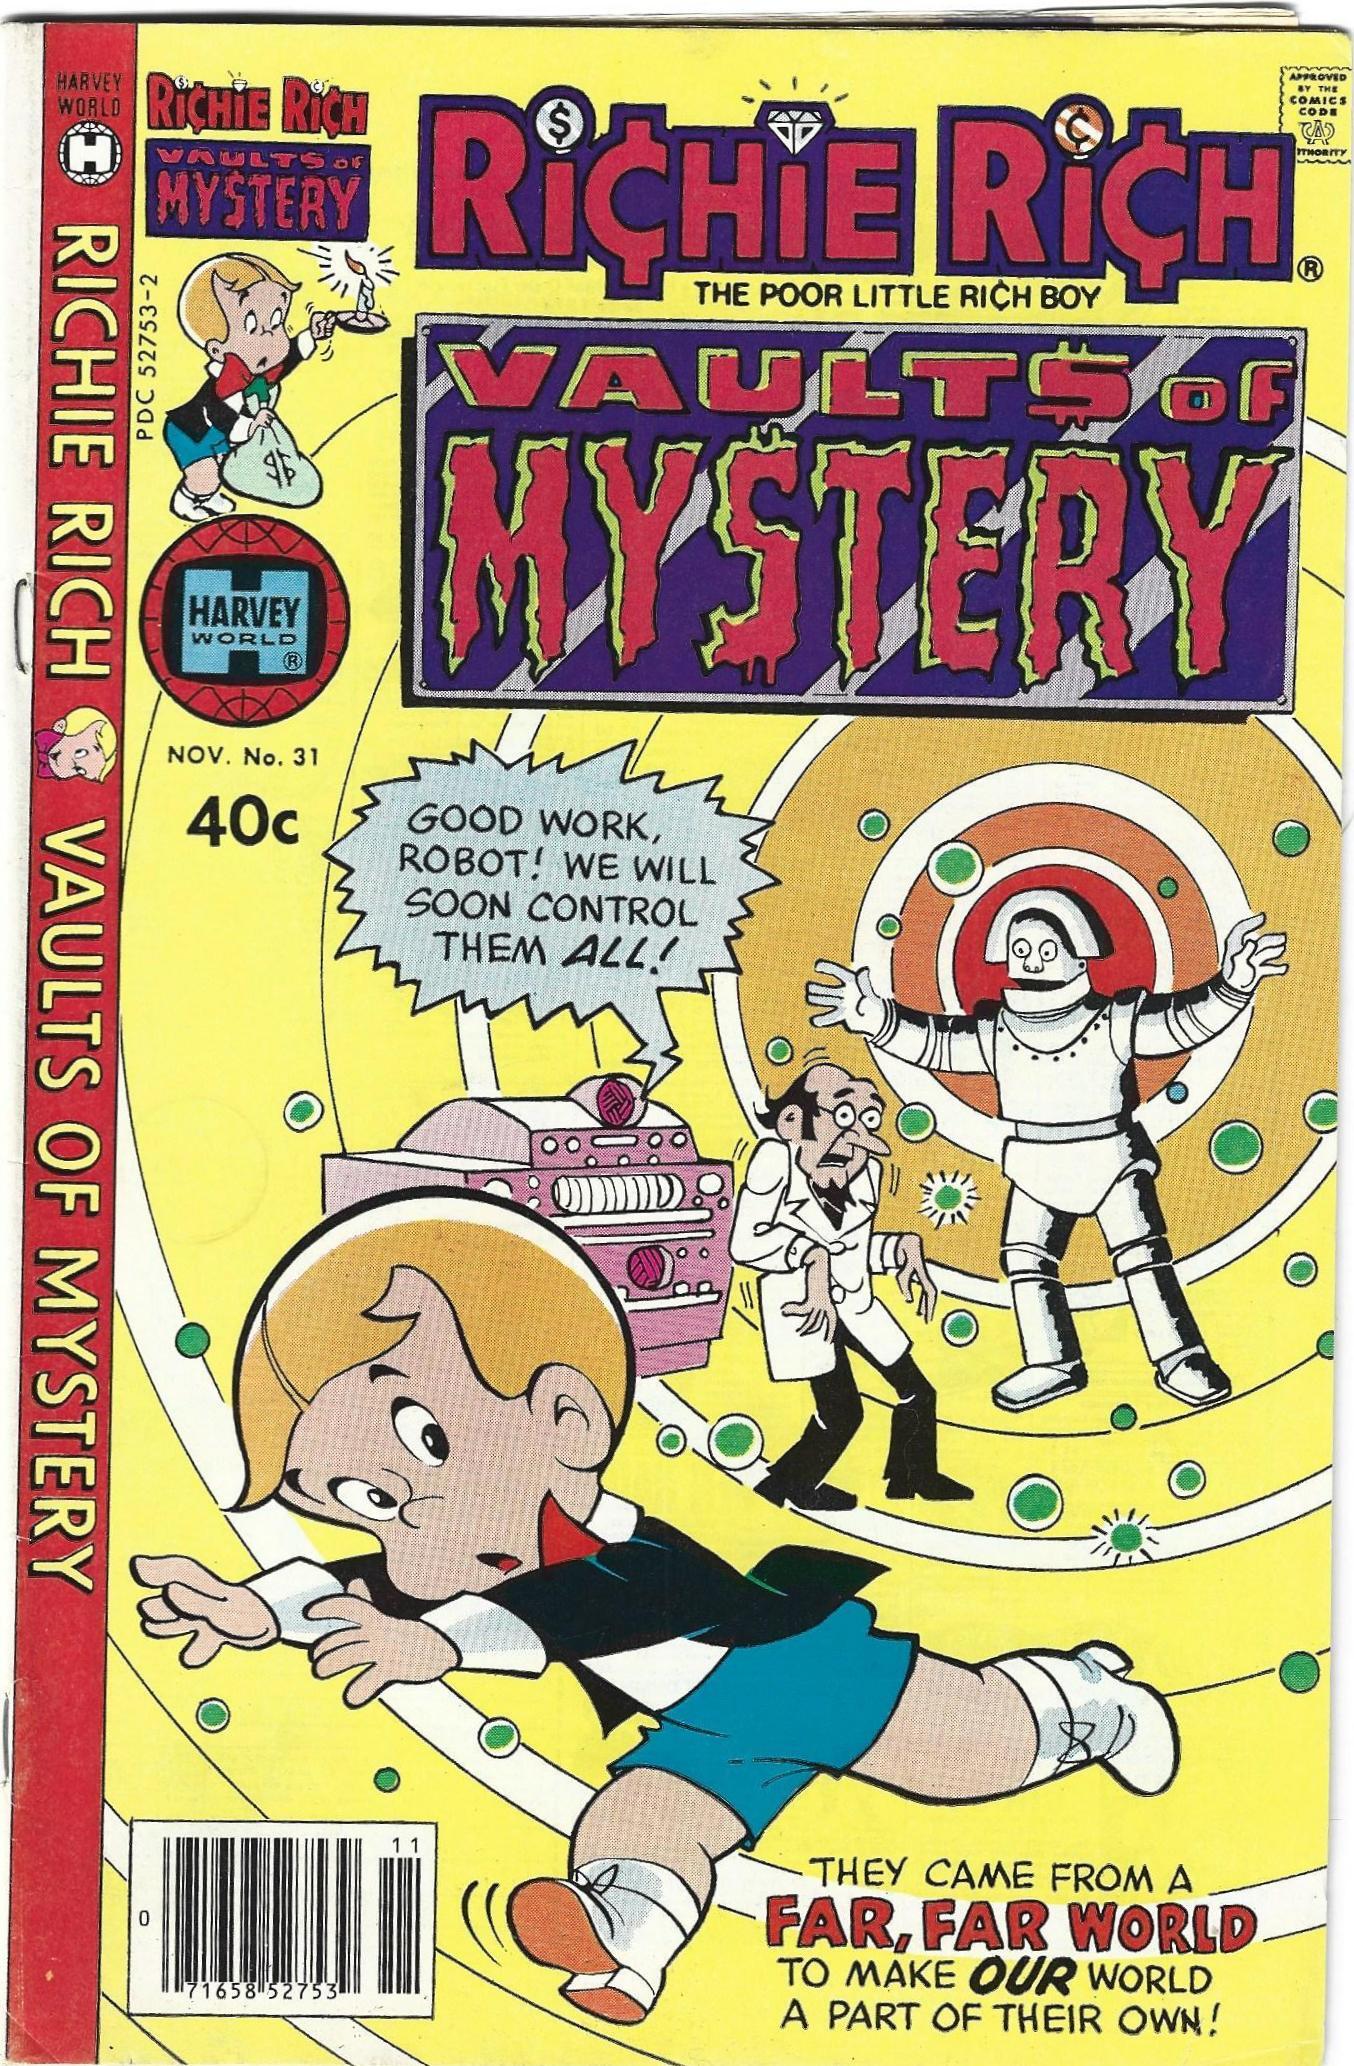 Richie Rich Vaults of Mystery #31 | Comic Books - Modern Age, Harvey, Richie  Rich, Cartoon Character / HipComic